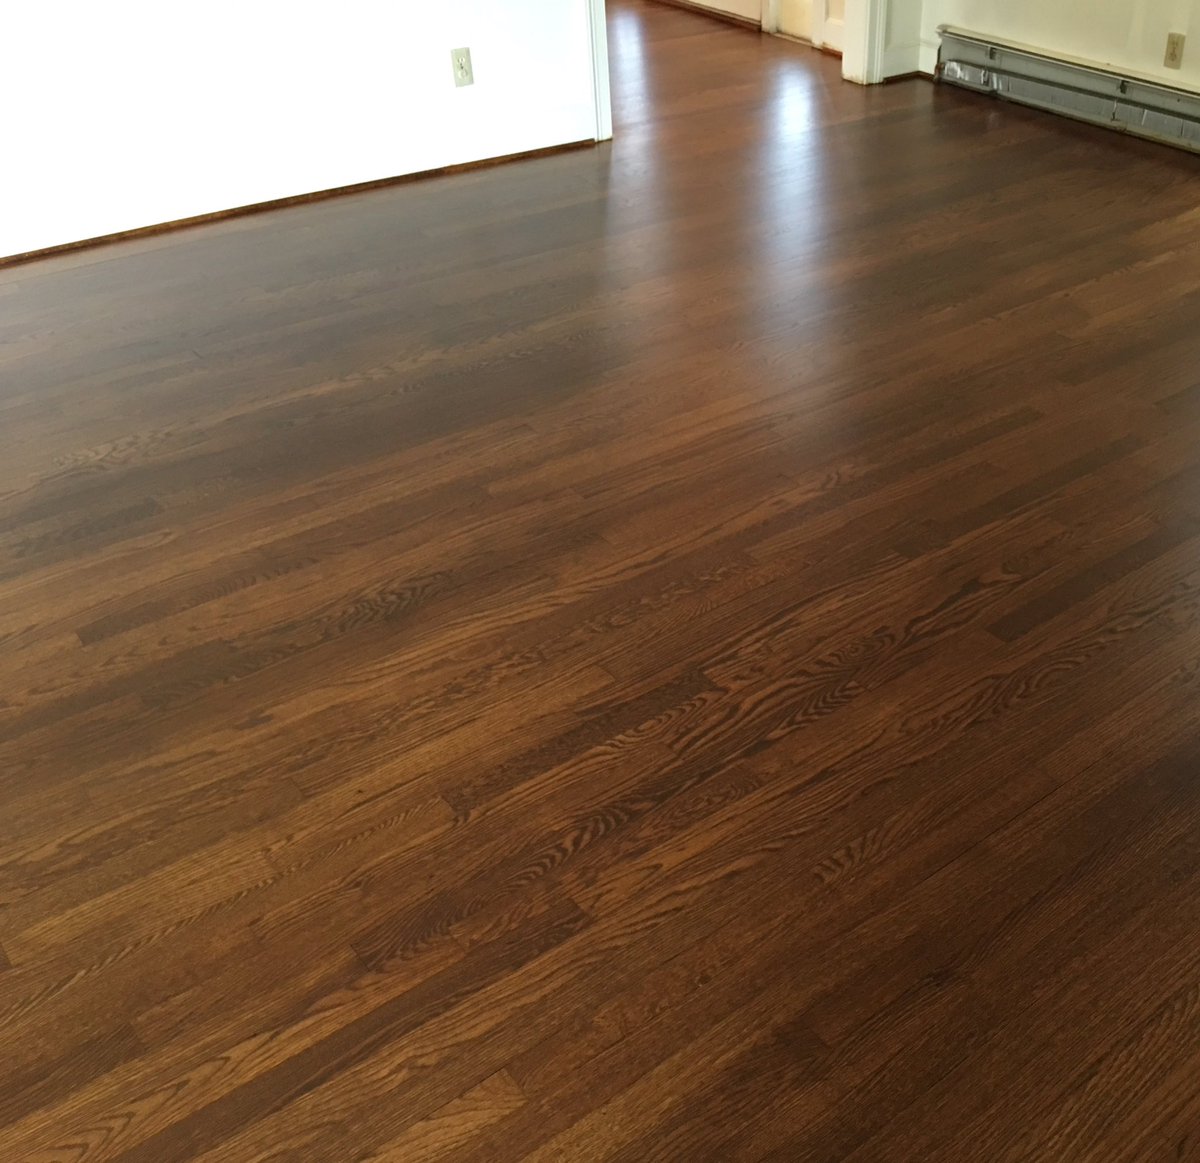 White Oak Floors In Antique Brown Pro, Antique Brown Hardwood Floors